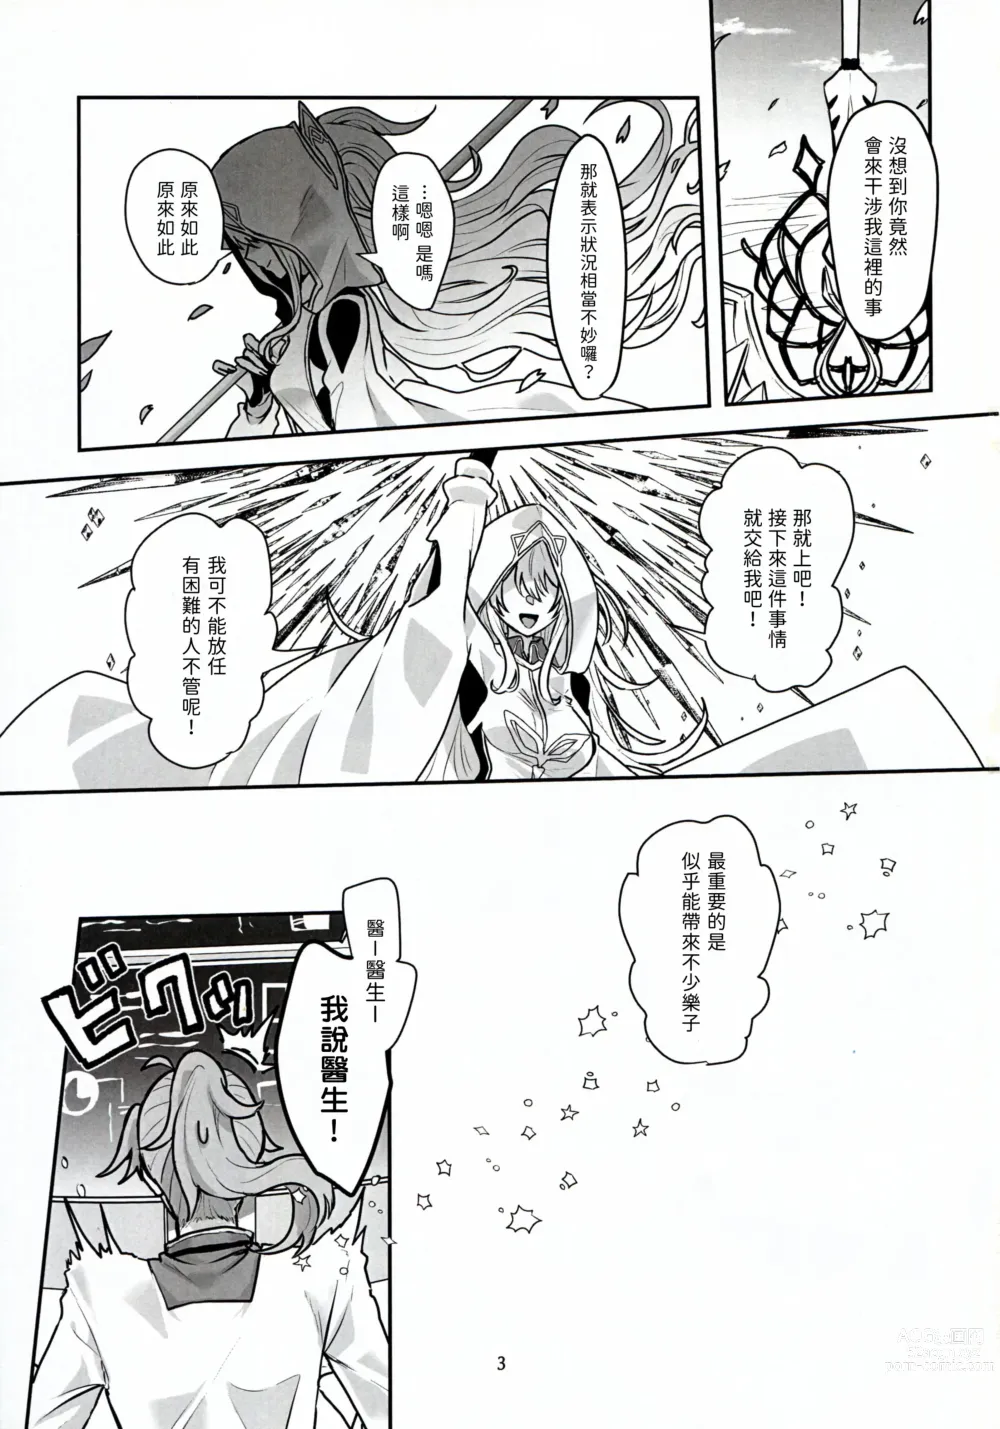 Page 3 of doujinshi 君だけのロマンチスト